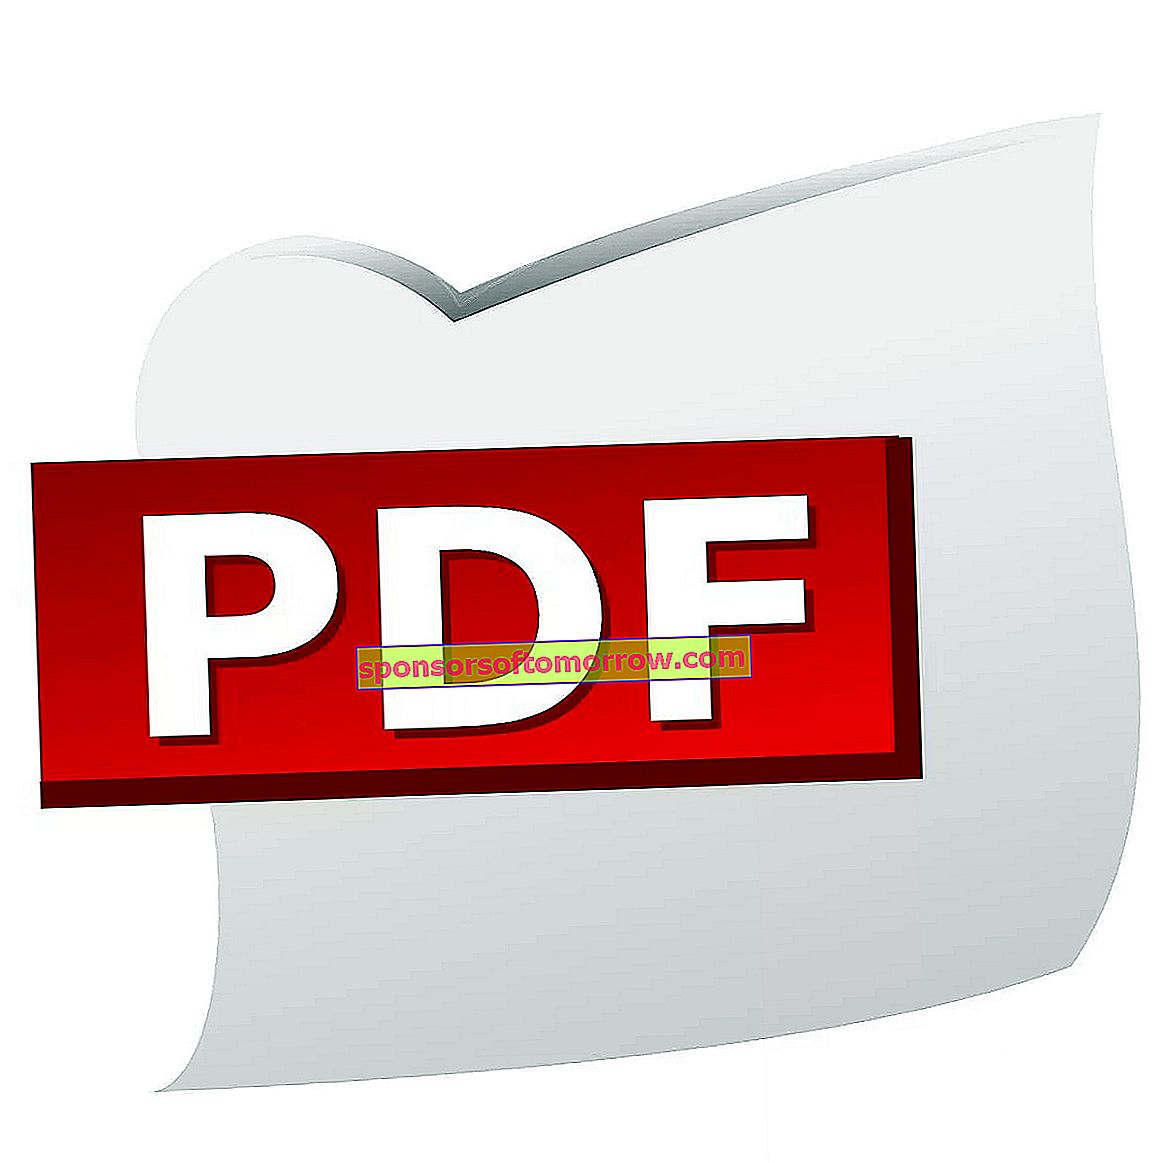 5 free apps to read PDF aloud